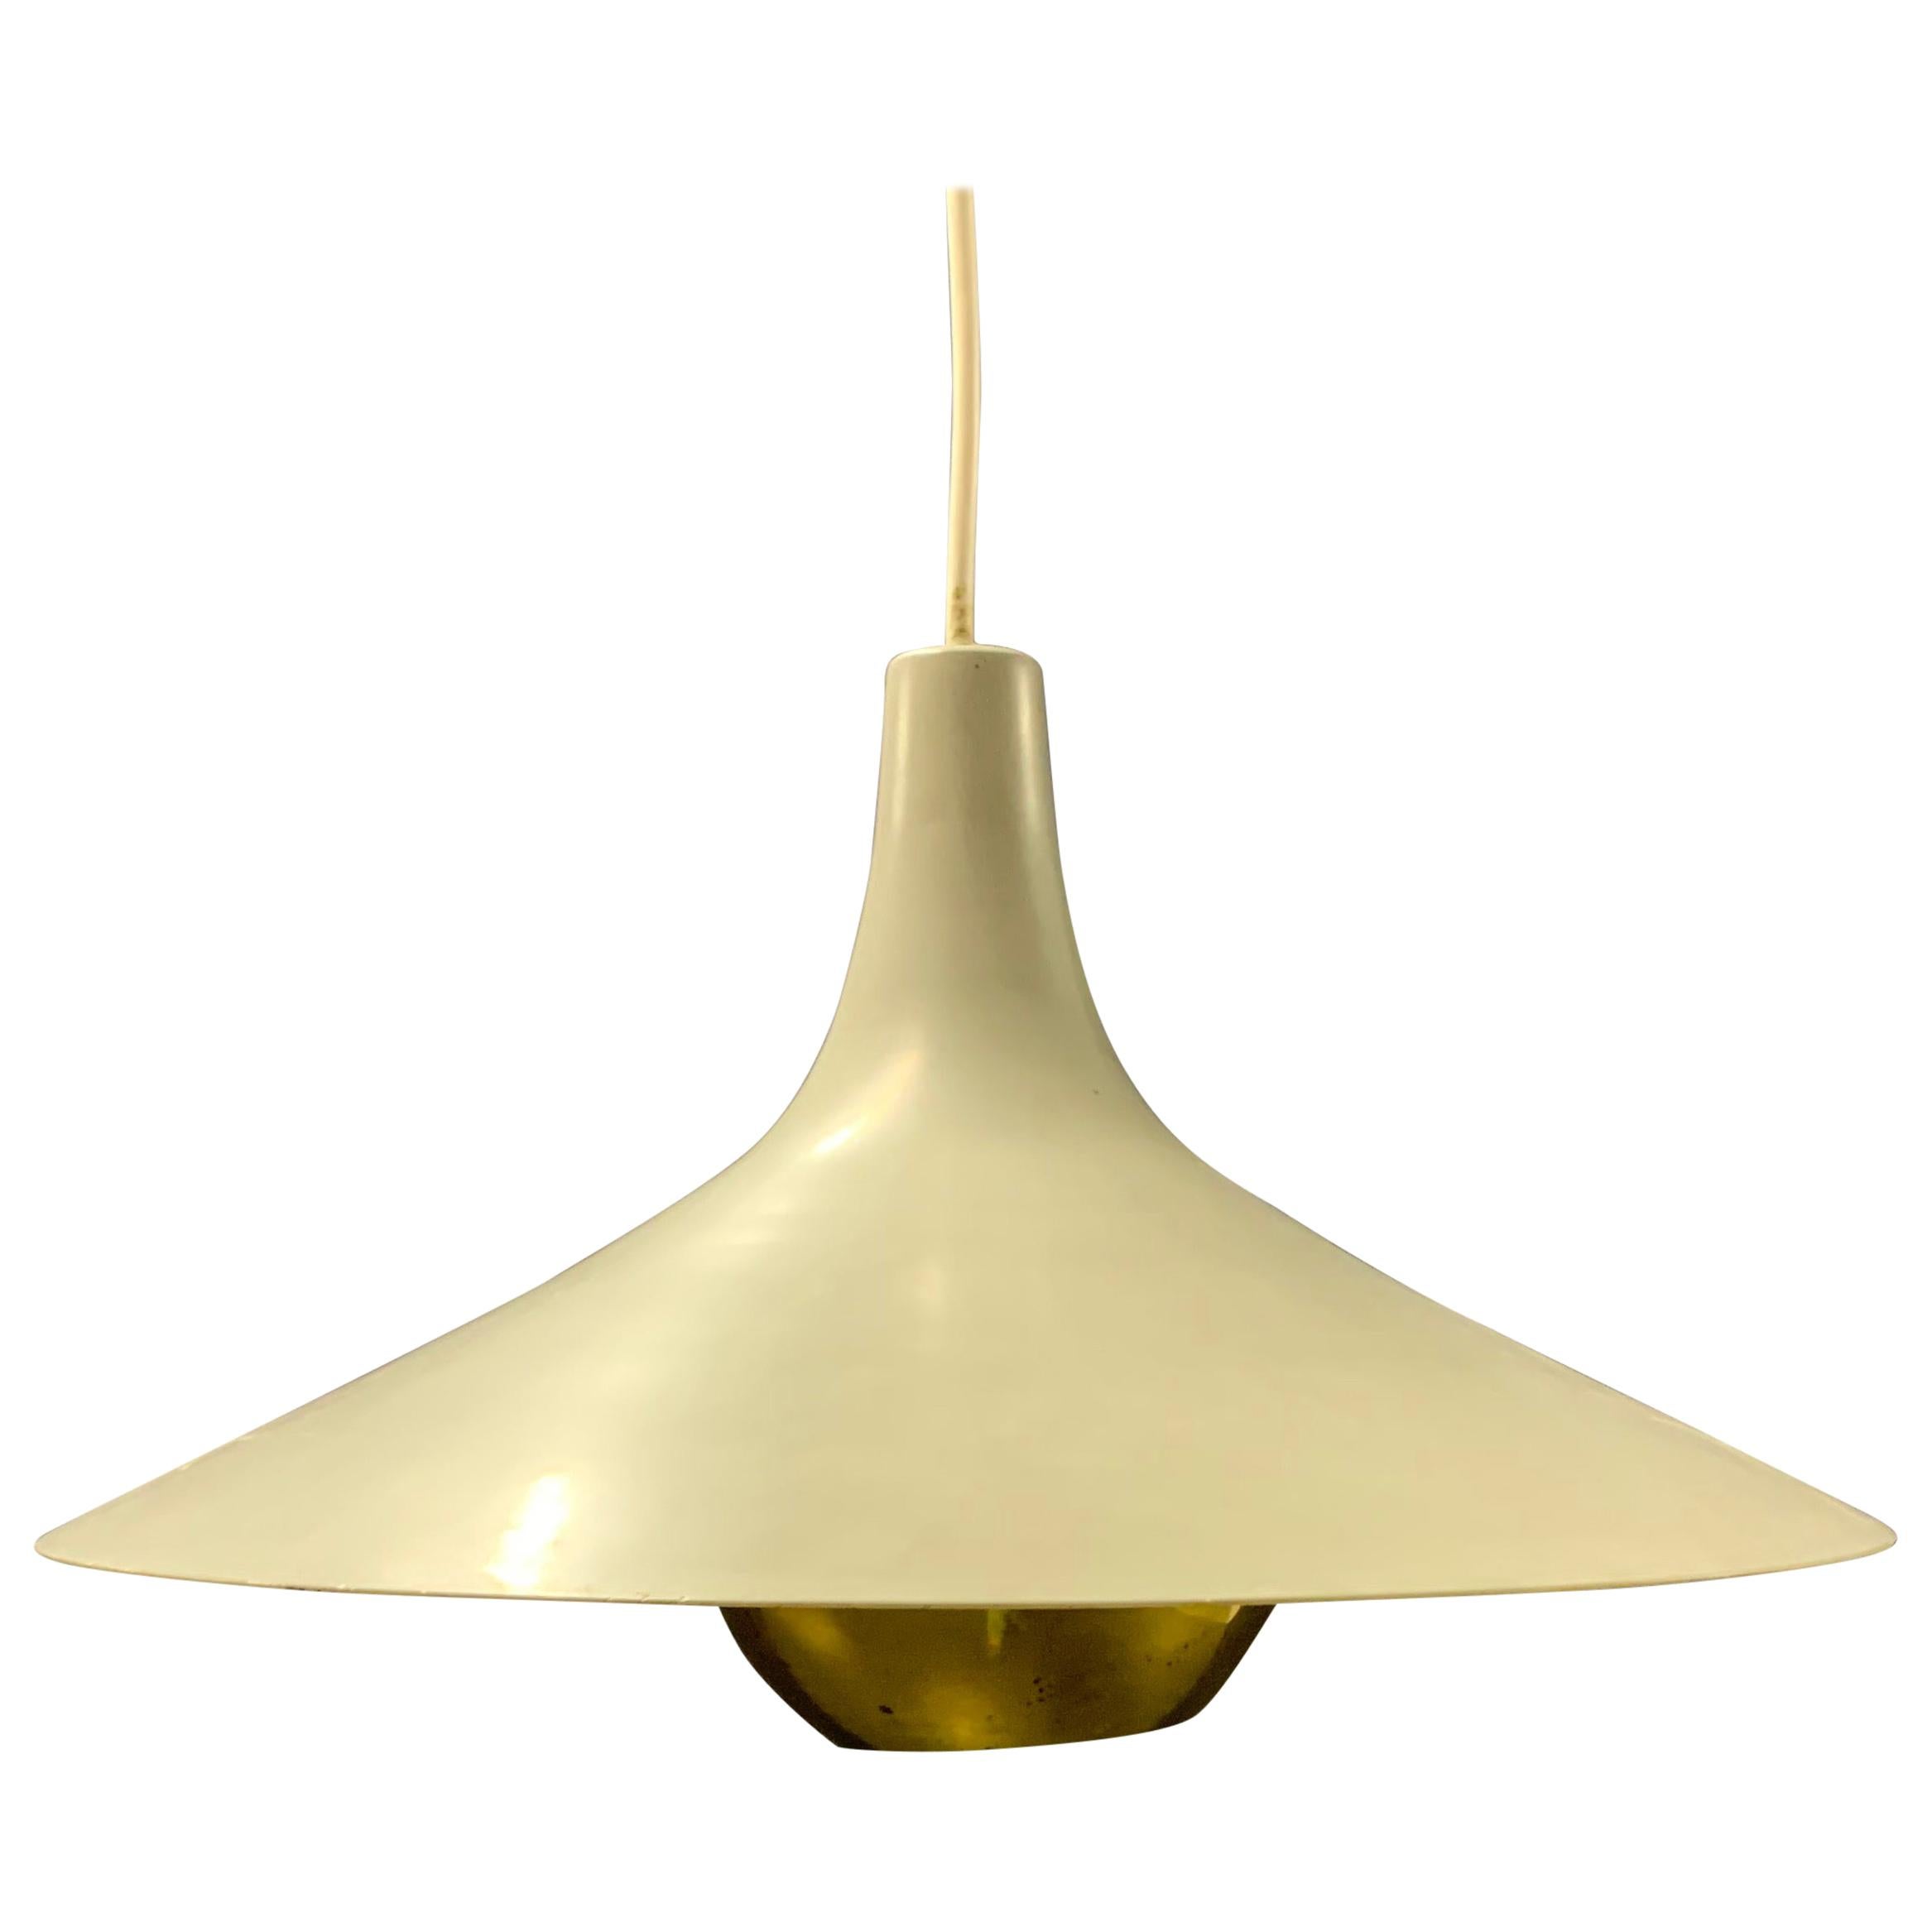 Very Rare Ceiling Lamp by Giuseppe Ostuni